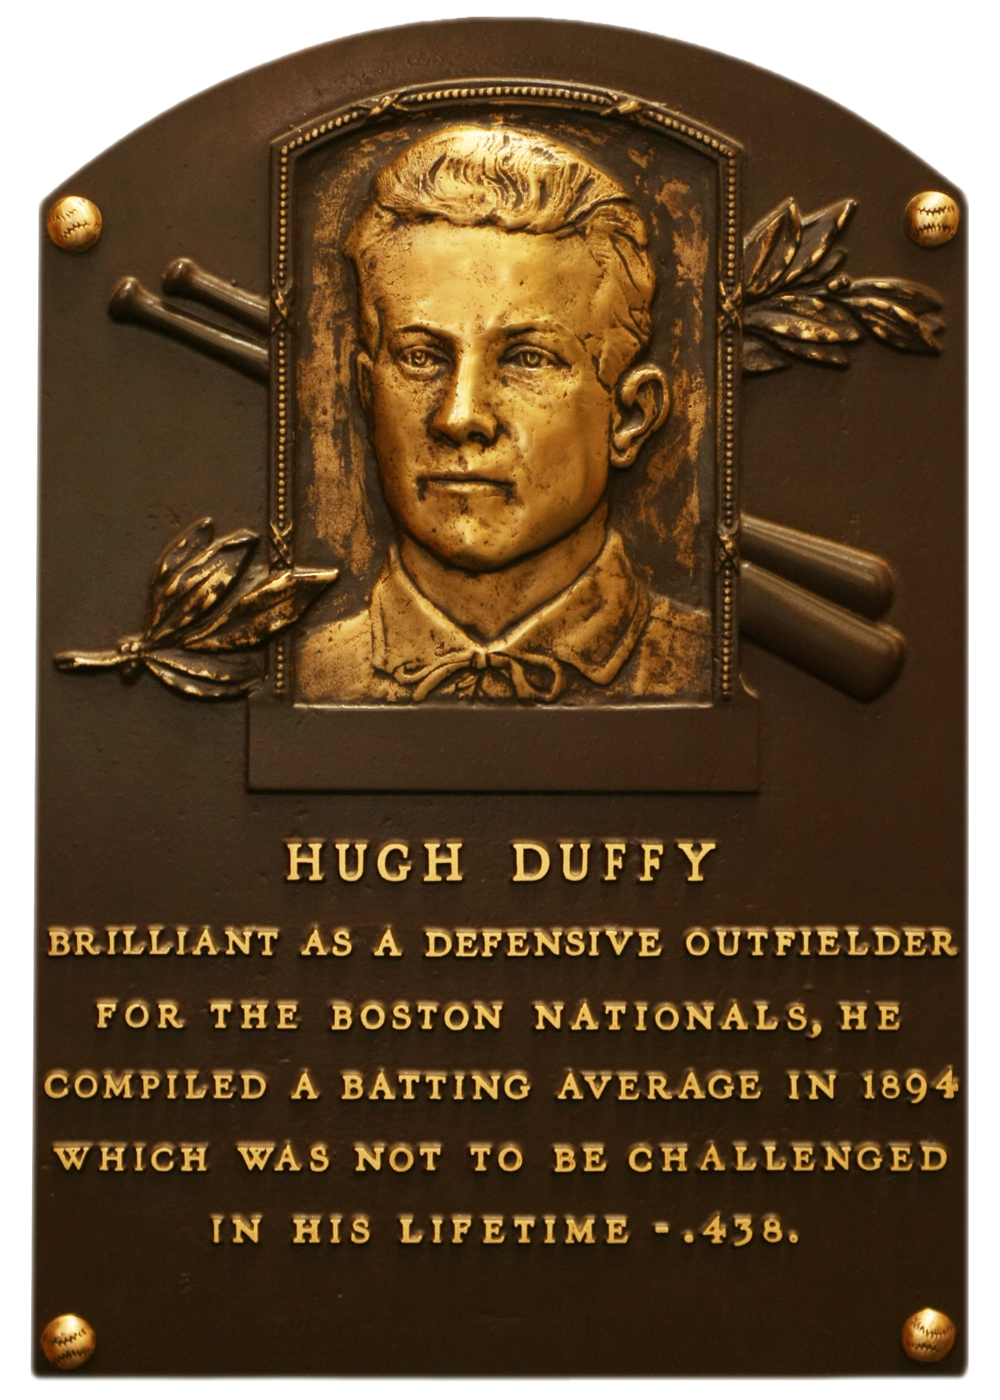 Hugh Duffy Hall of Fame plaque